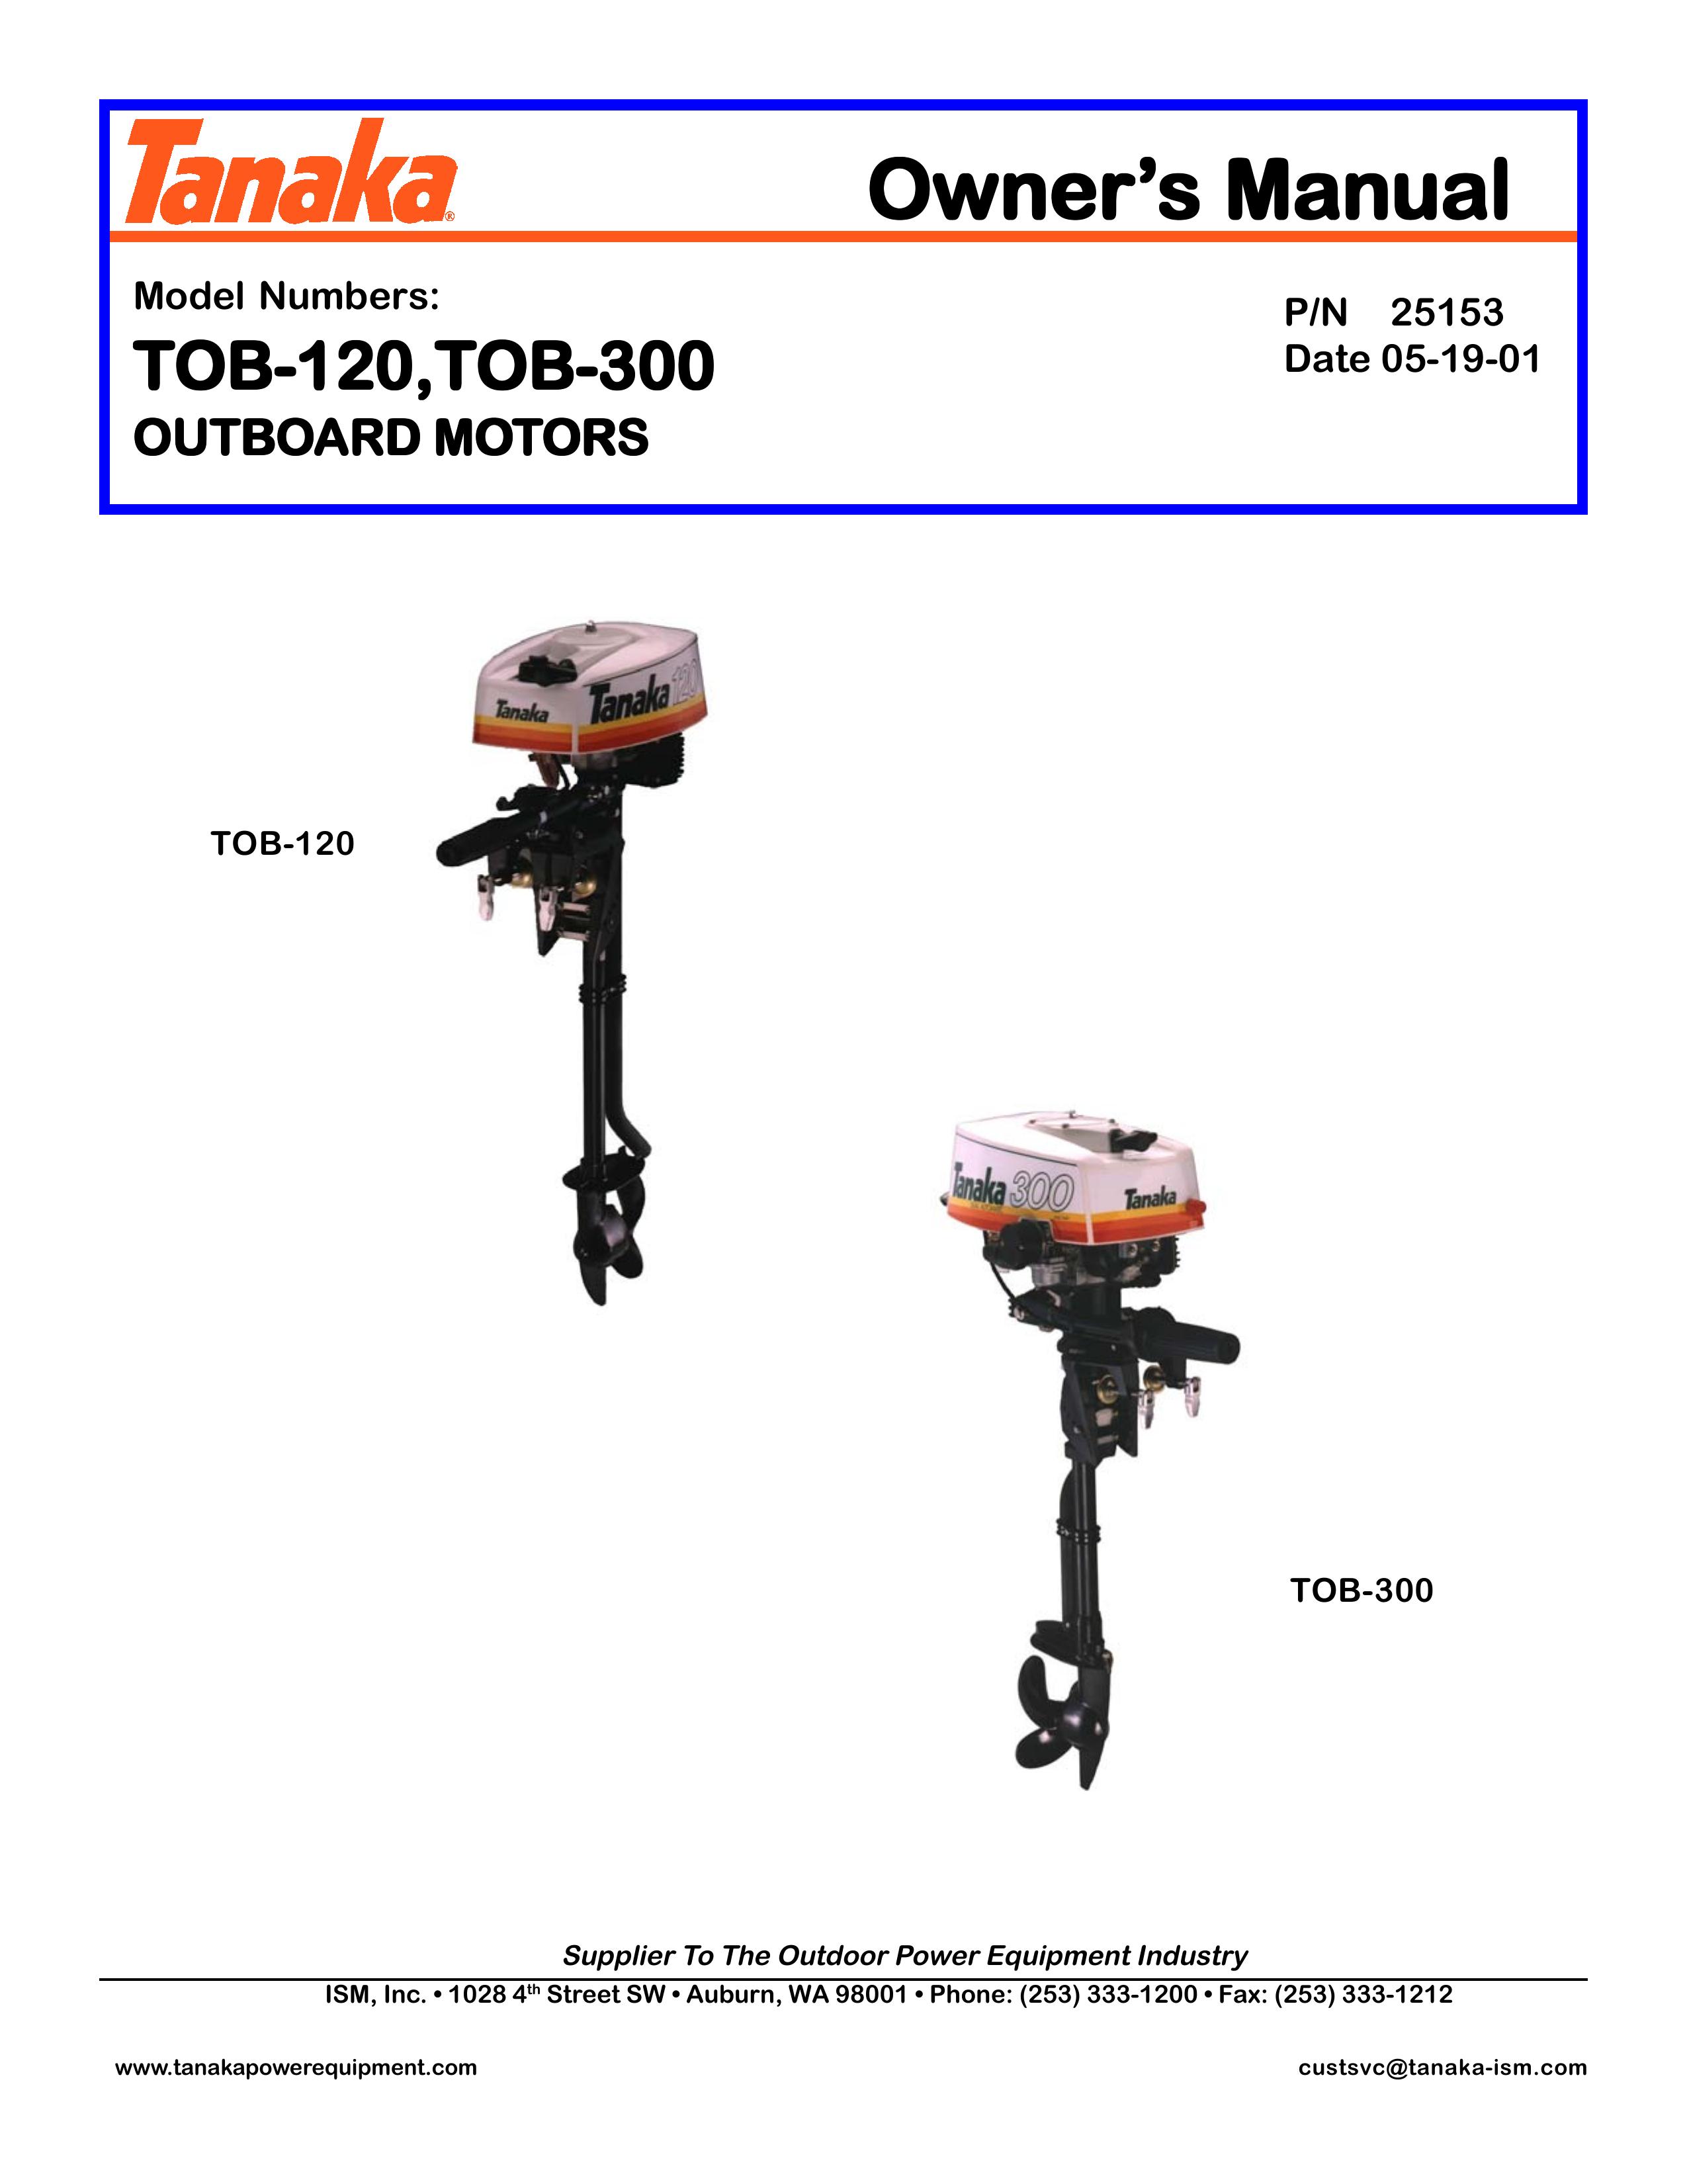 Tanaka TOB-120 Outboard Motor User Manual